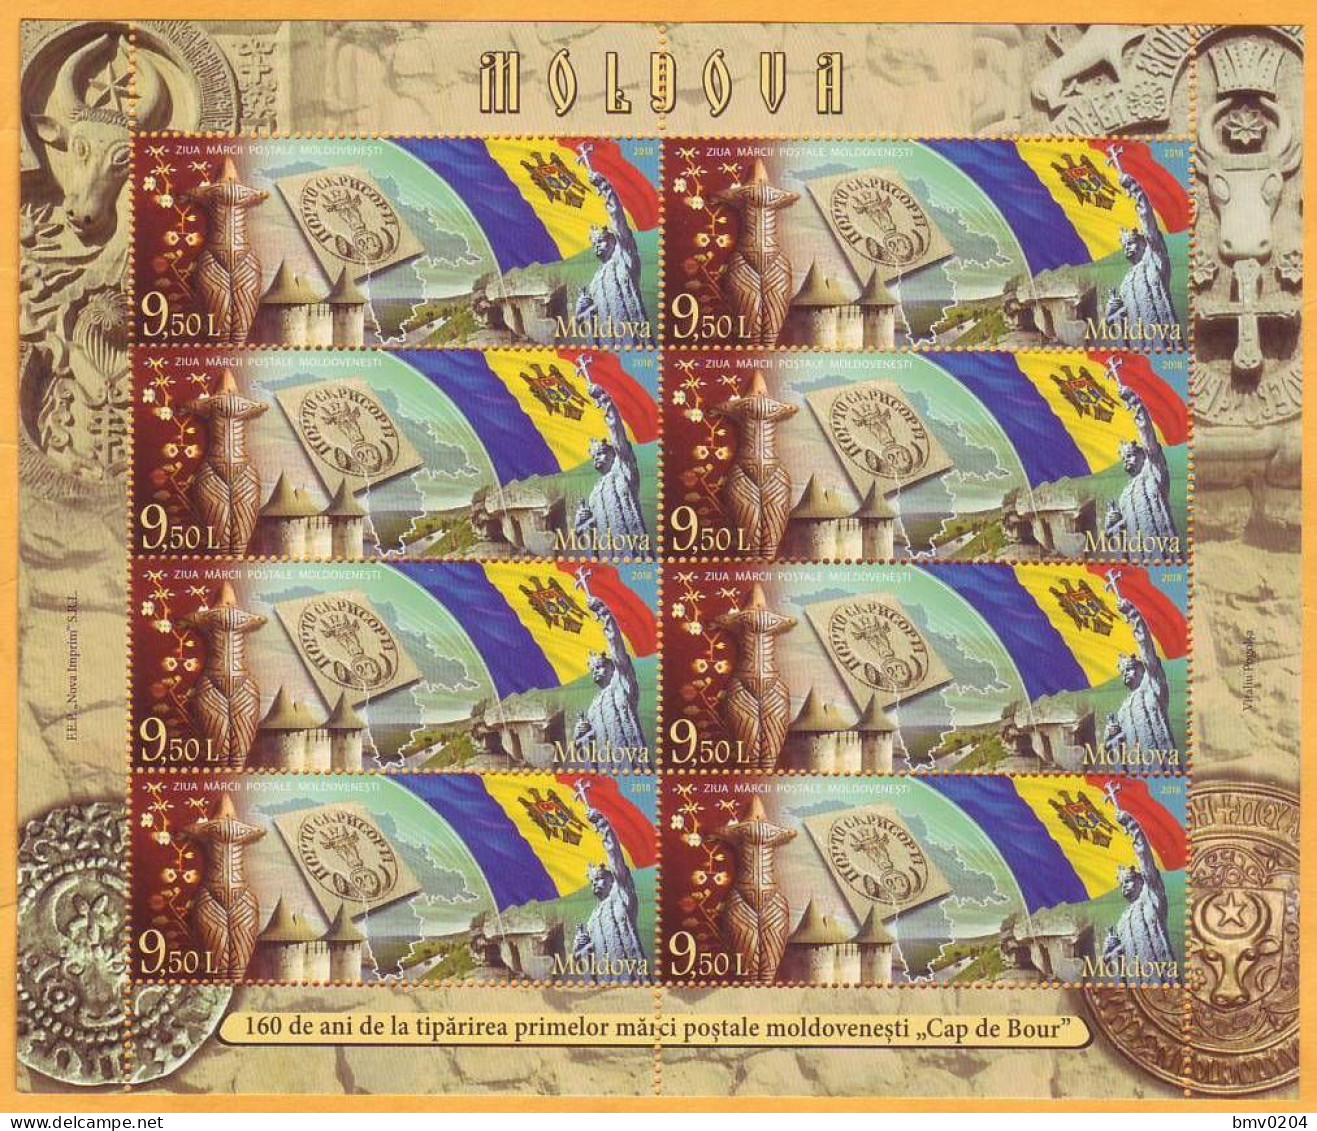 2018 Moldova Moldavie Moldau 160 Years  "Moldovan Postmark Day" Transnistria Romania  Sheetlet Mint - Día Del Sello